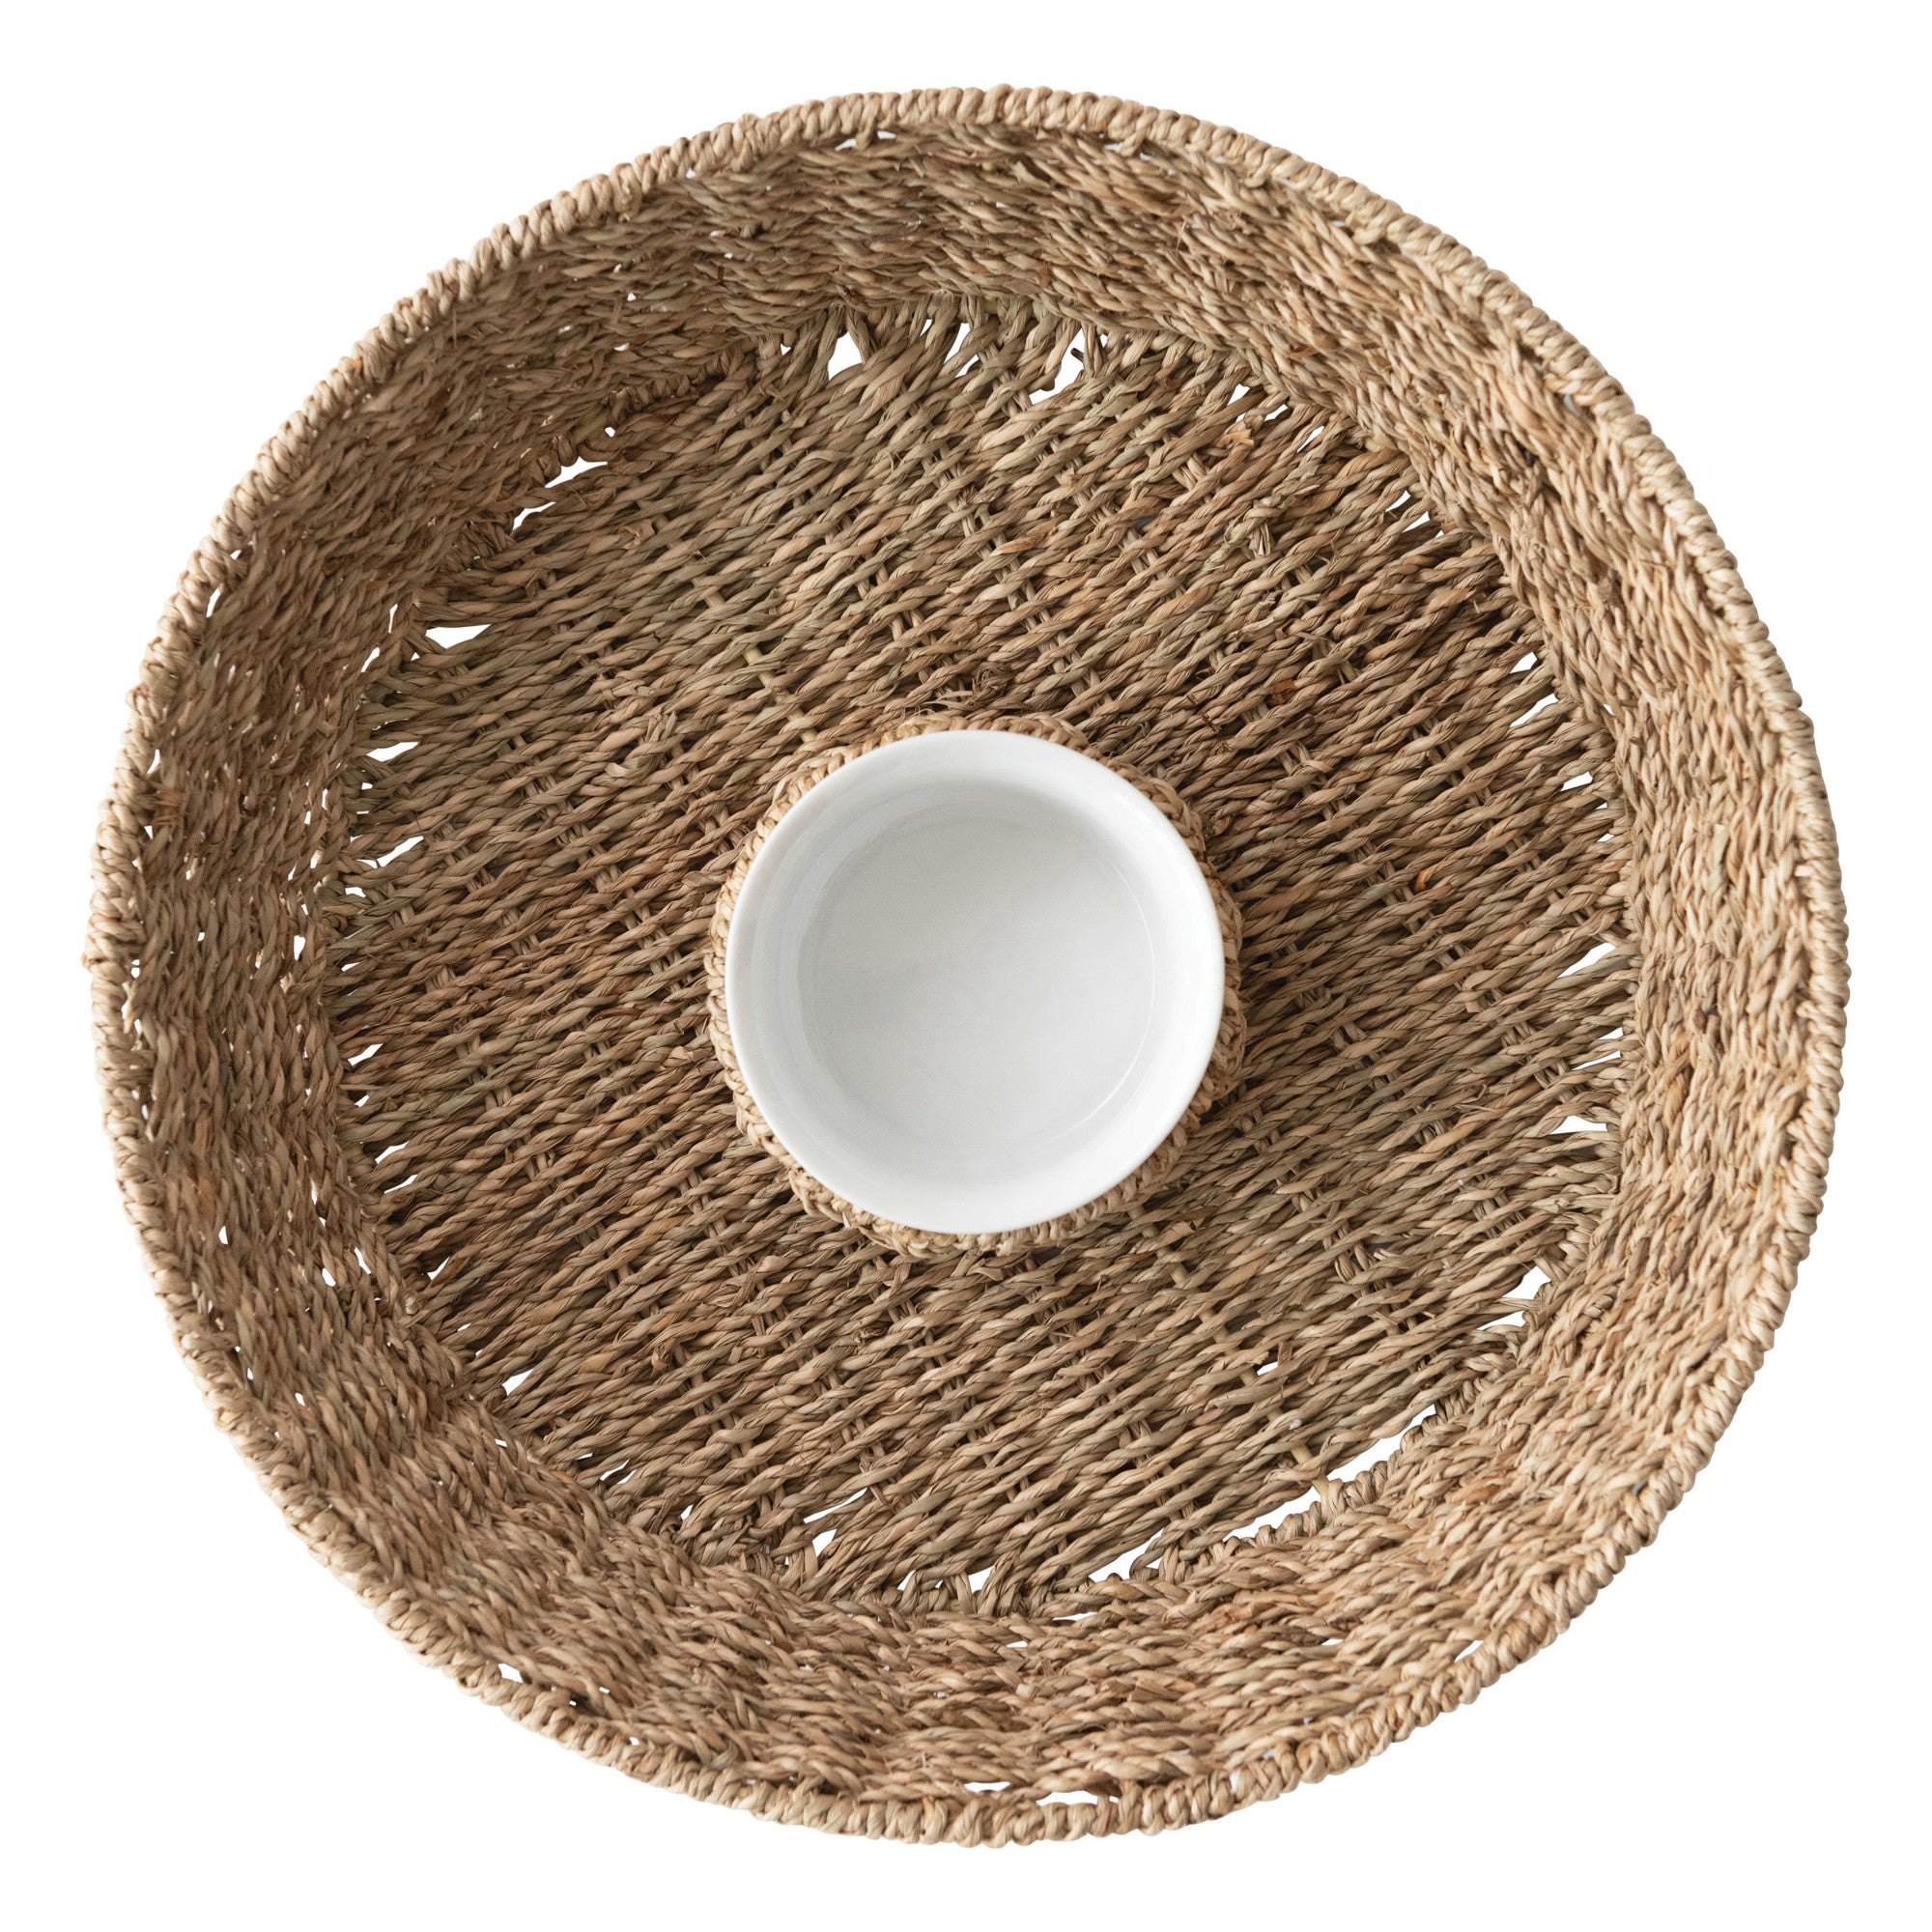 Seagrass Basket w/ Ceramic Bowl Set/2